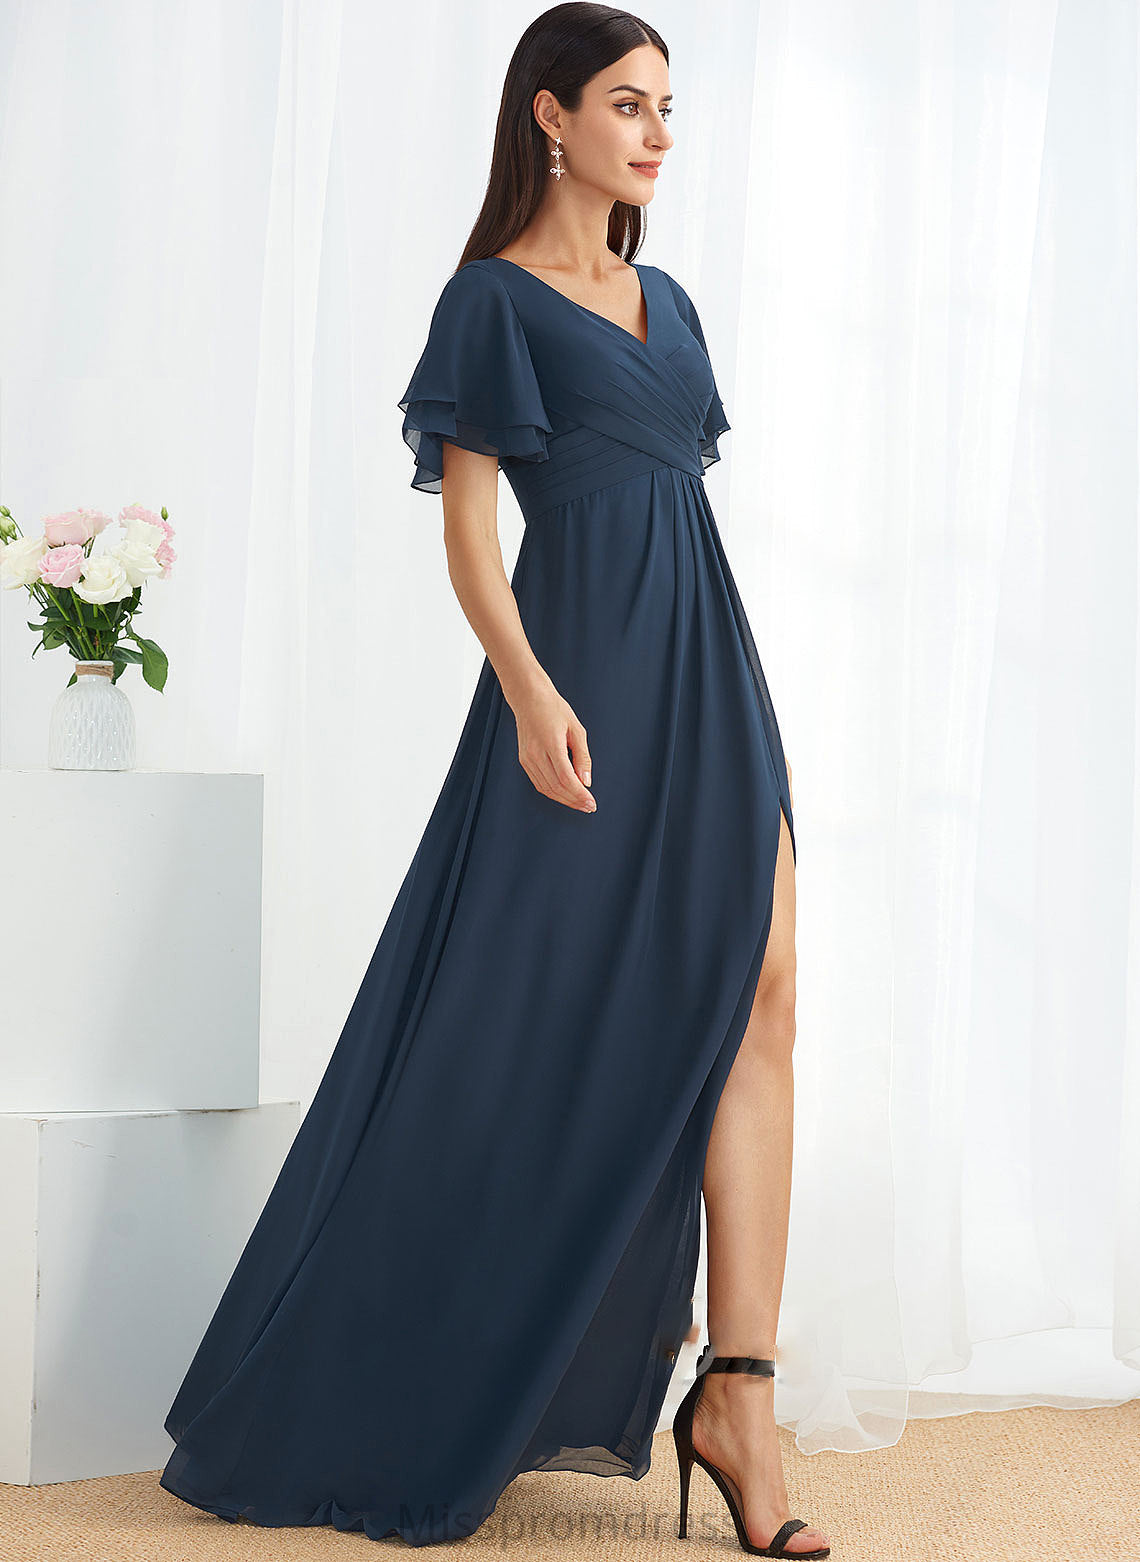 Silhouette A-Line Neckline Embellishment Fabric Length Floor-Length V-neck SplitFront Cora Short Sleeves Floor Length Bridesmaid Dresses